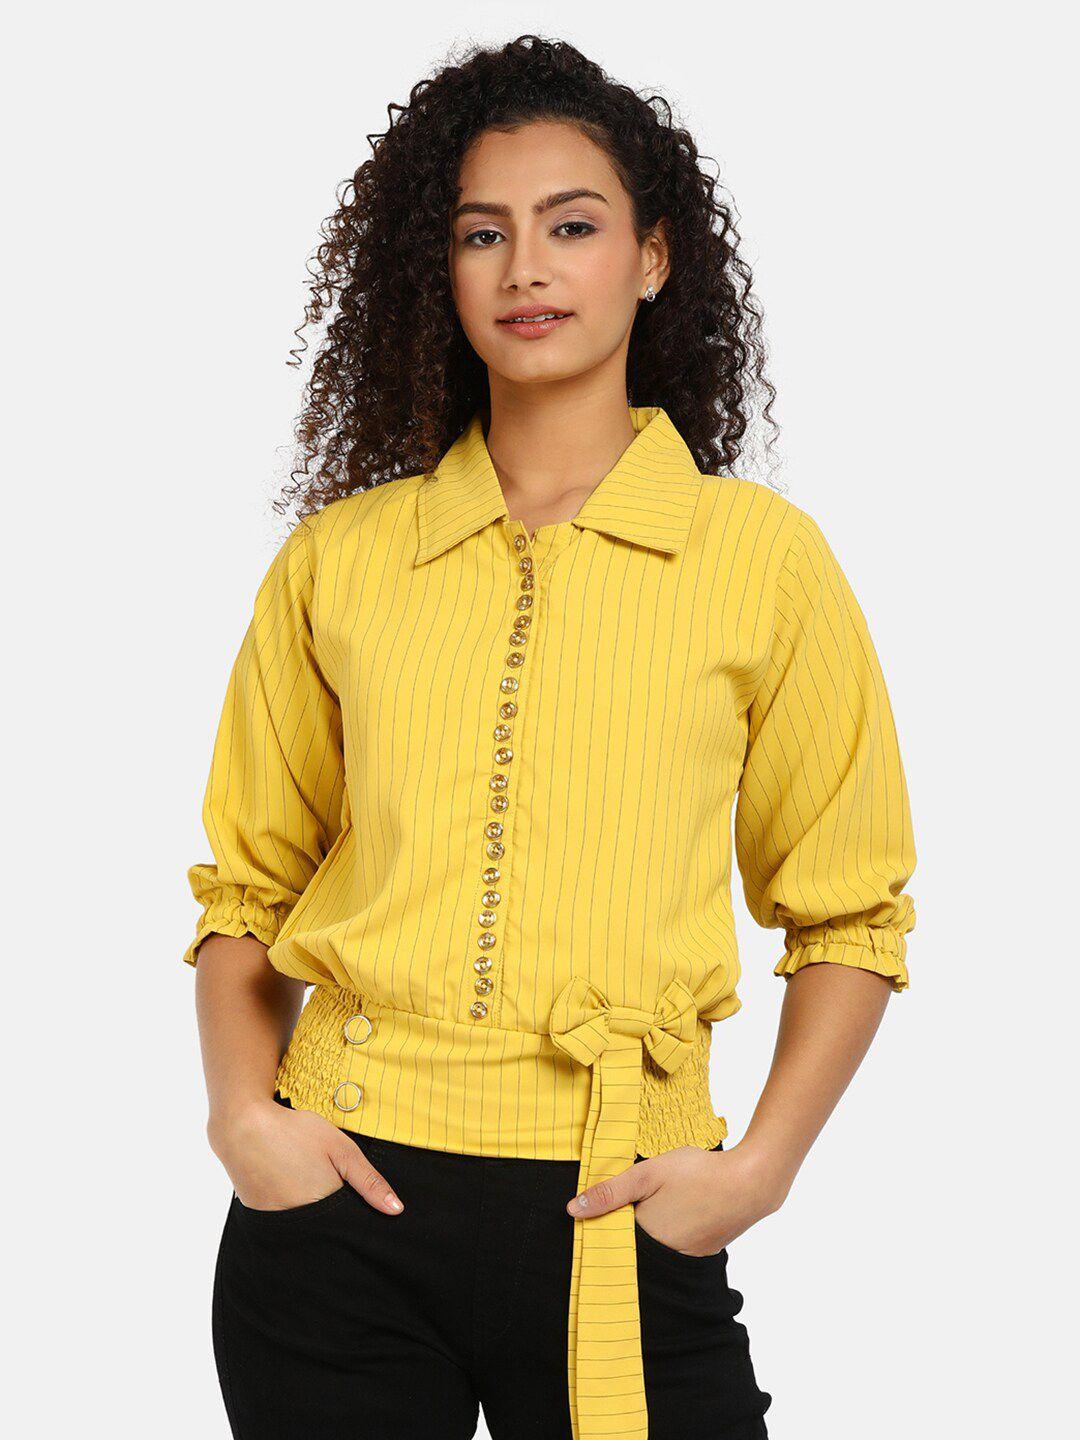 v-mart mustard yellow striped shirt style top